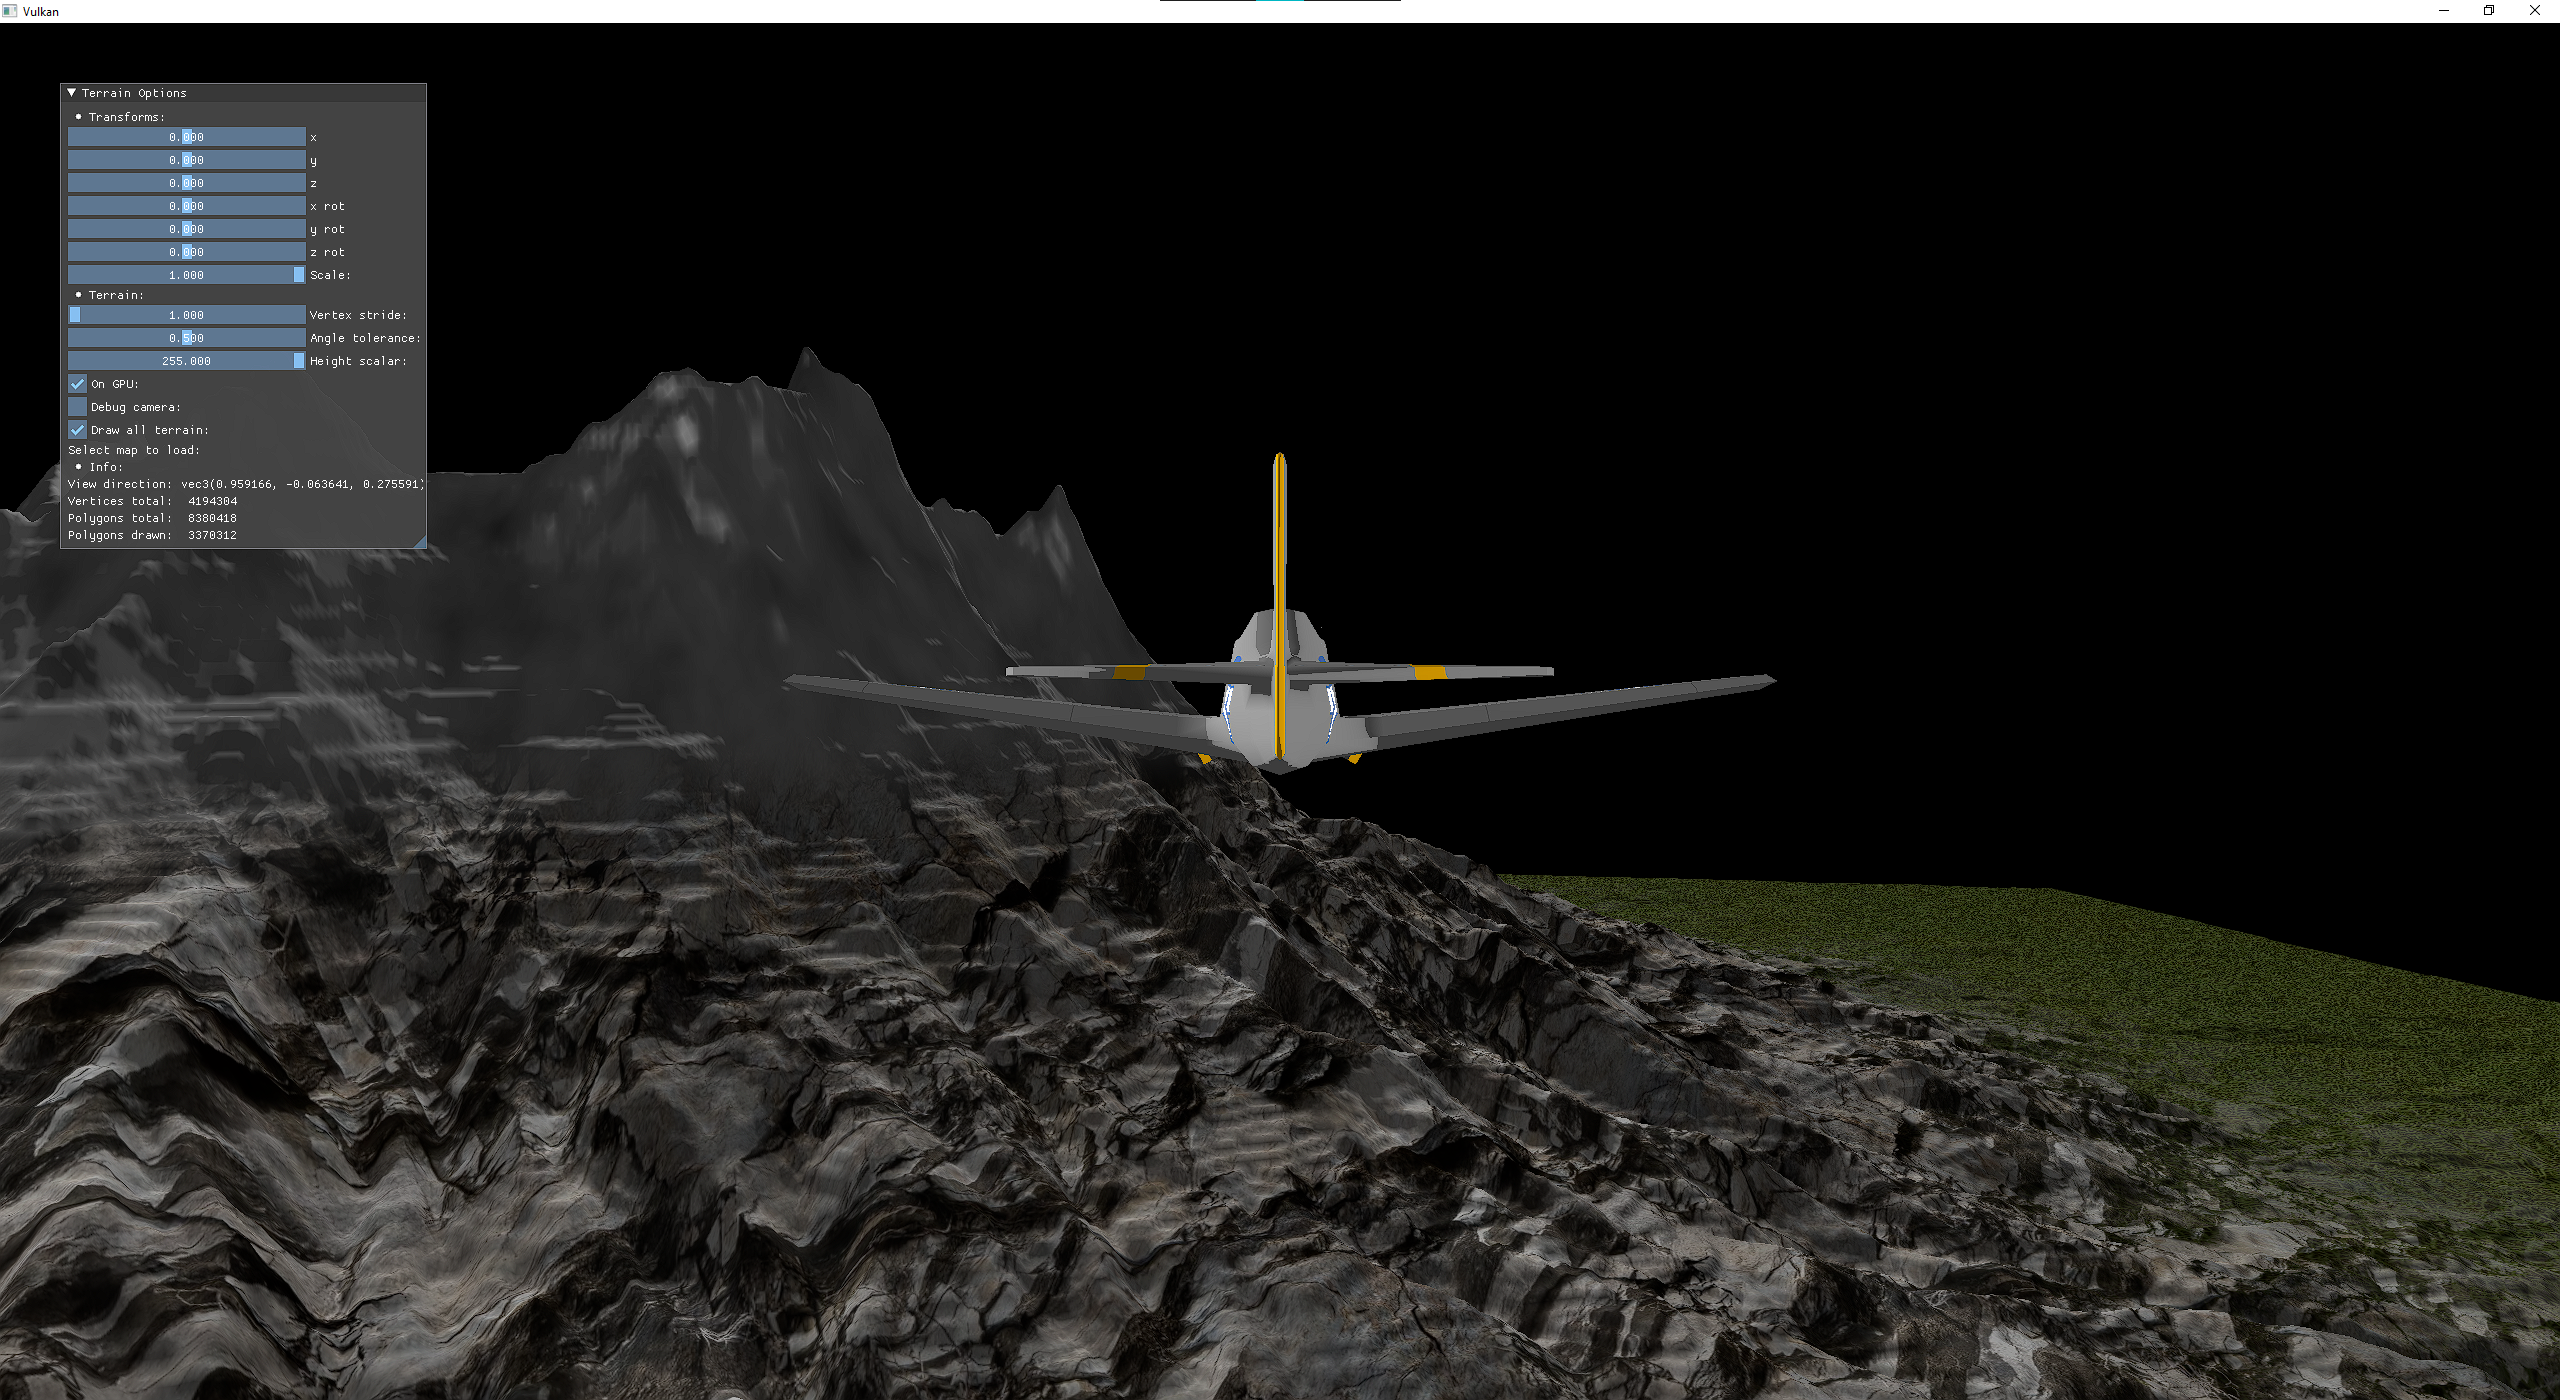 Flight sim and terrain render